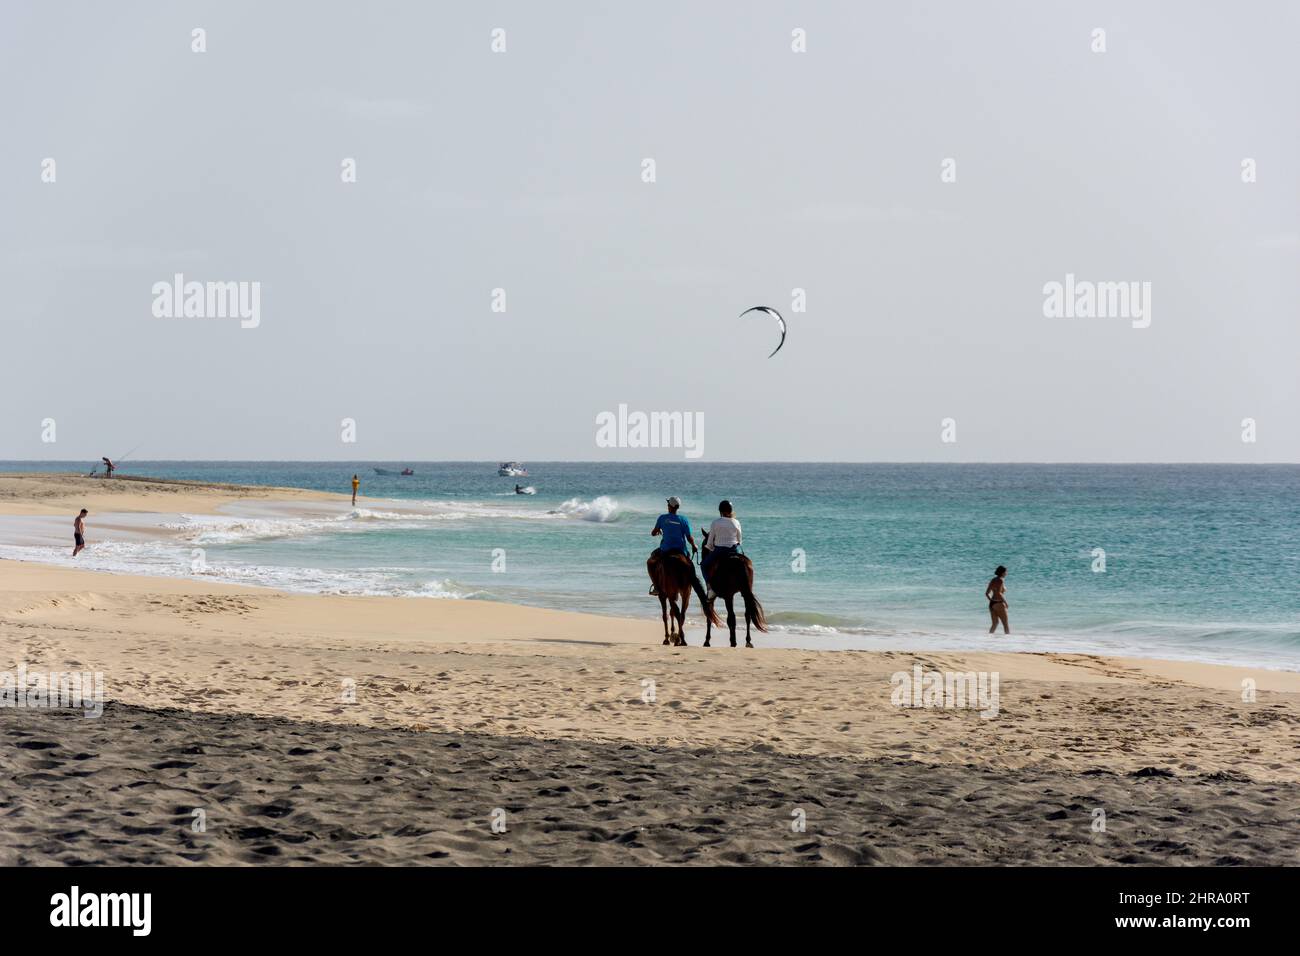 Horse riding and kite surfing, Dune of Sal Beach, Santa Maria, Sal (IIha do Sal), República de Cabo (Cape Verde) Stock Photo